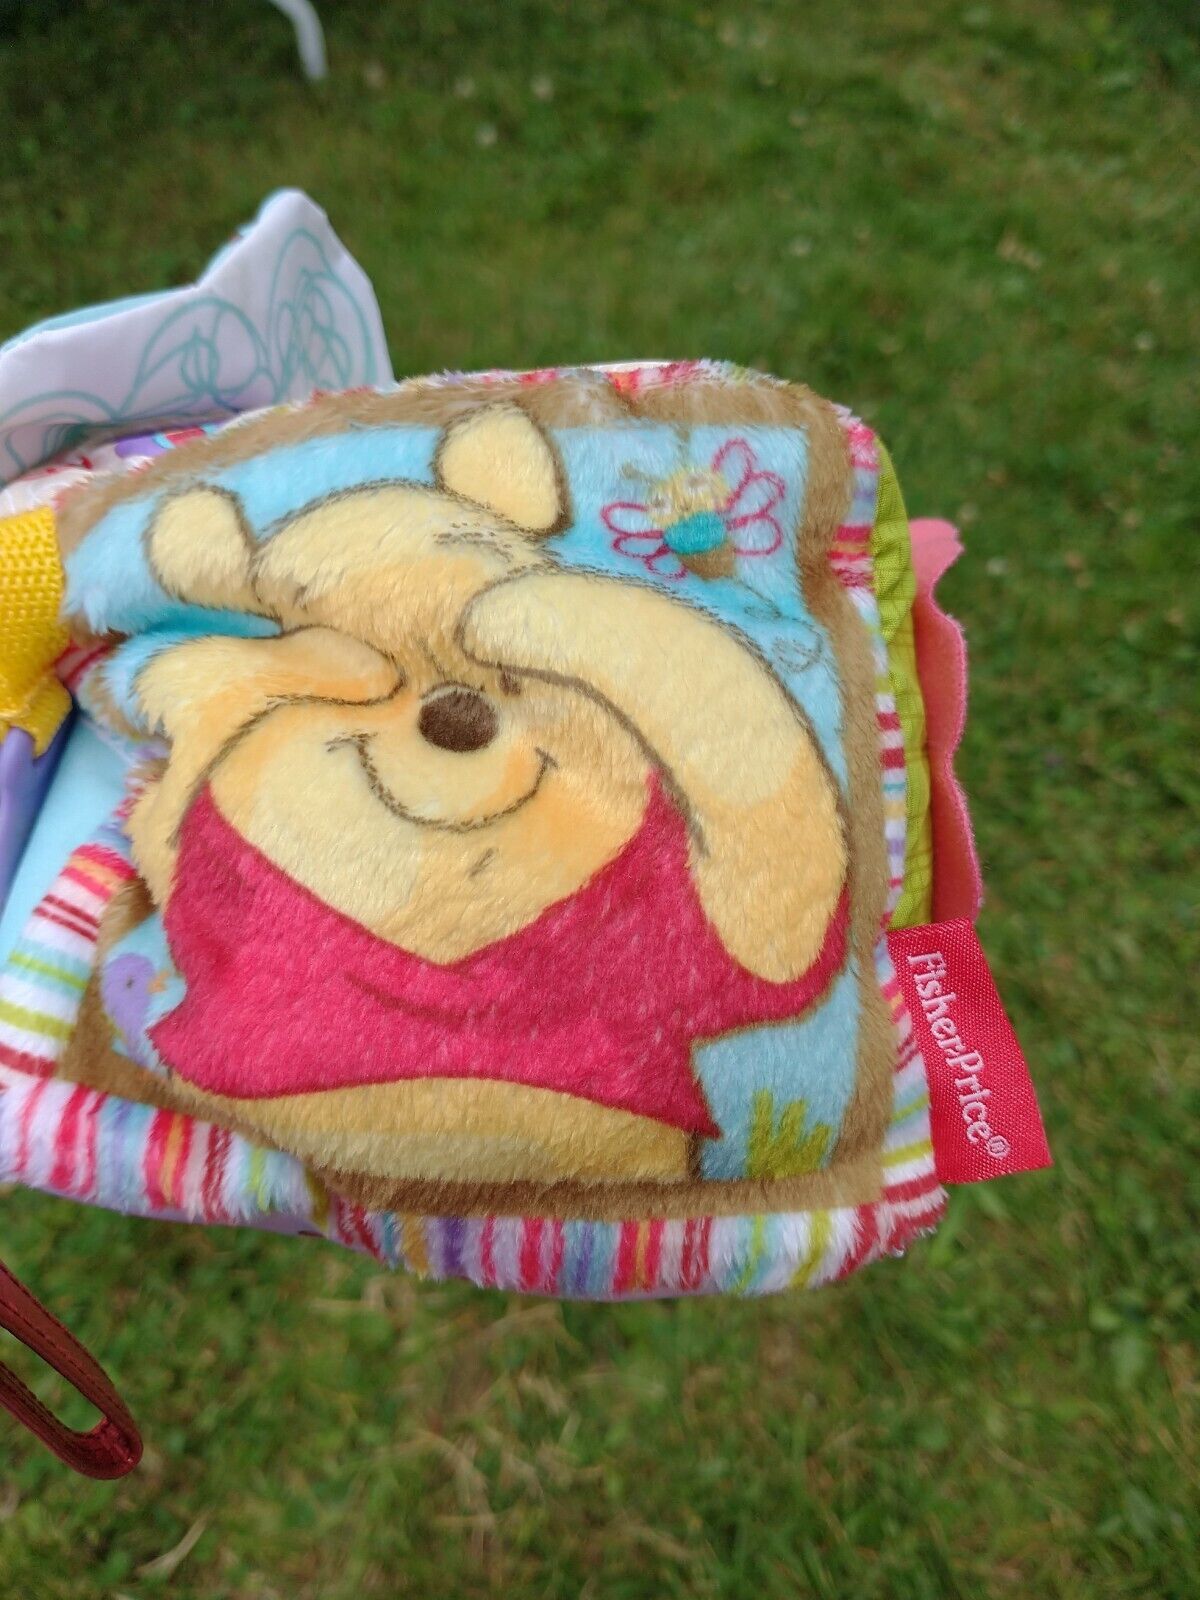 Fisher Price Winnie The Pooh&friends baby multi- sensory plush toy 2013 - $7.92